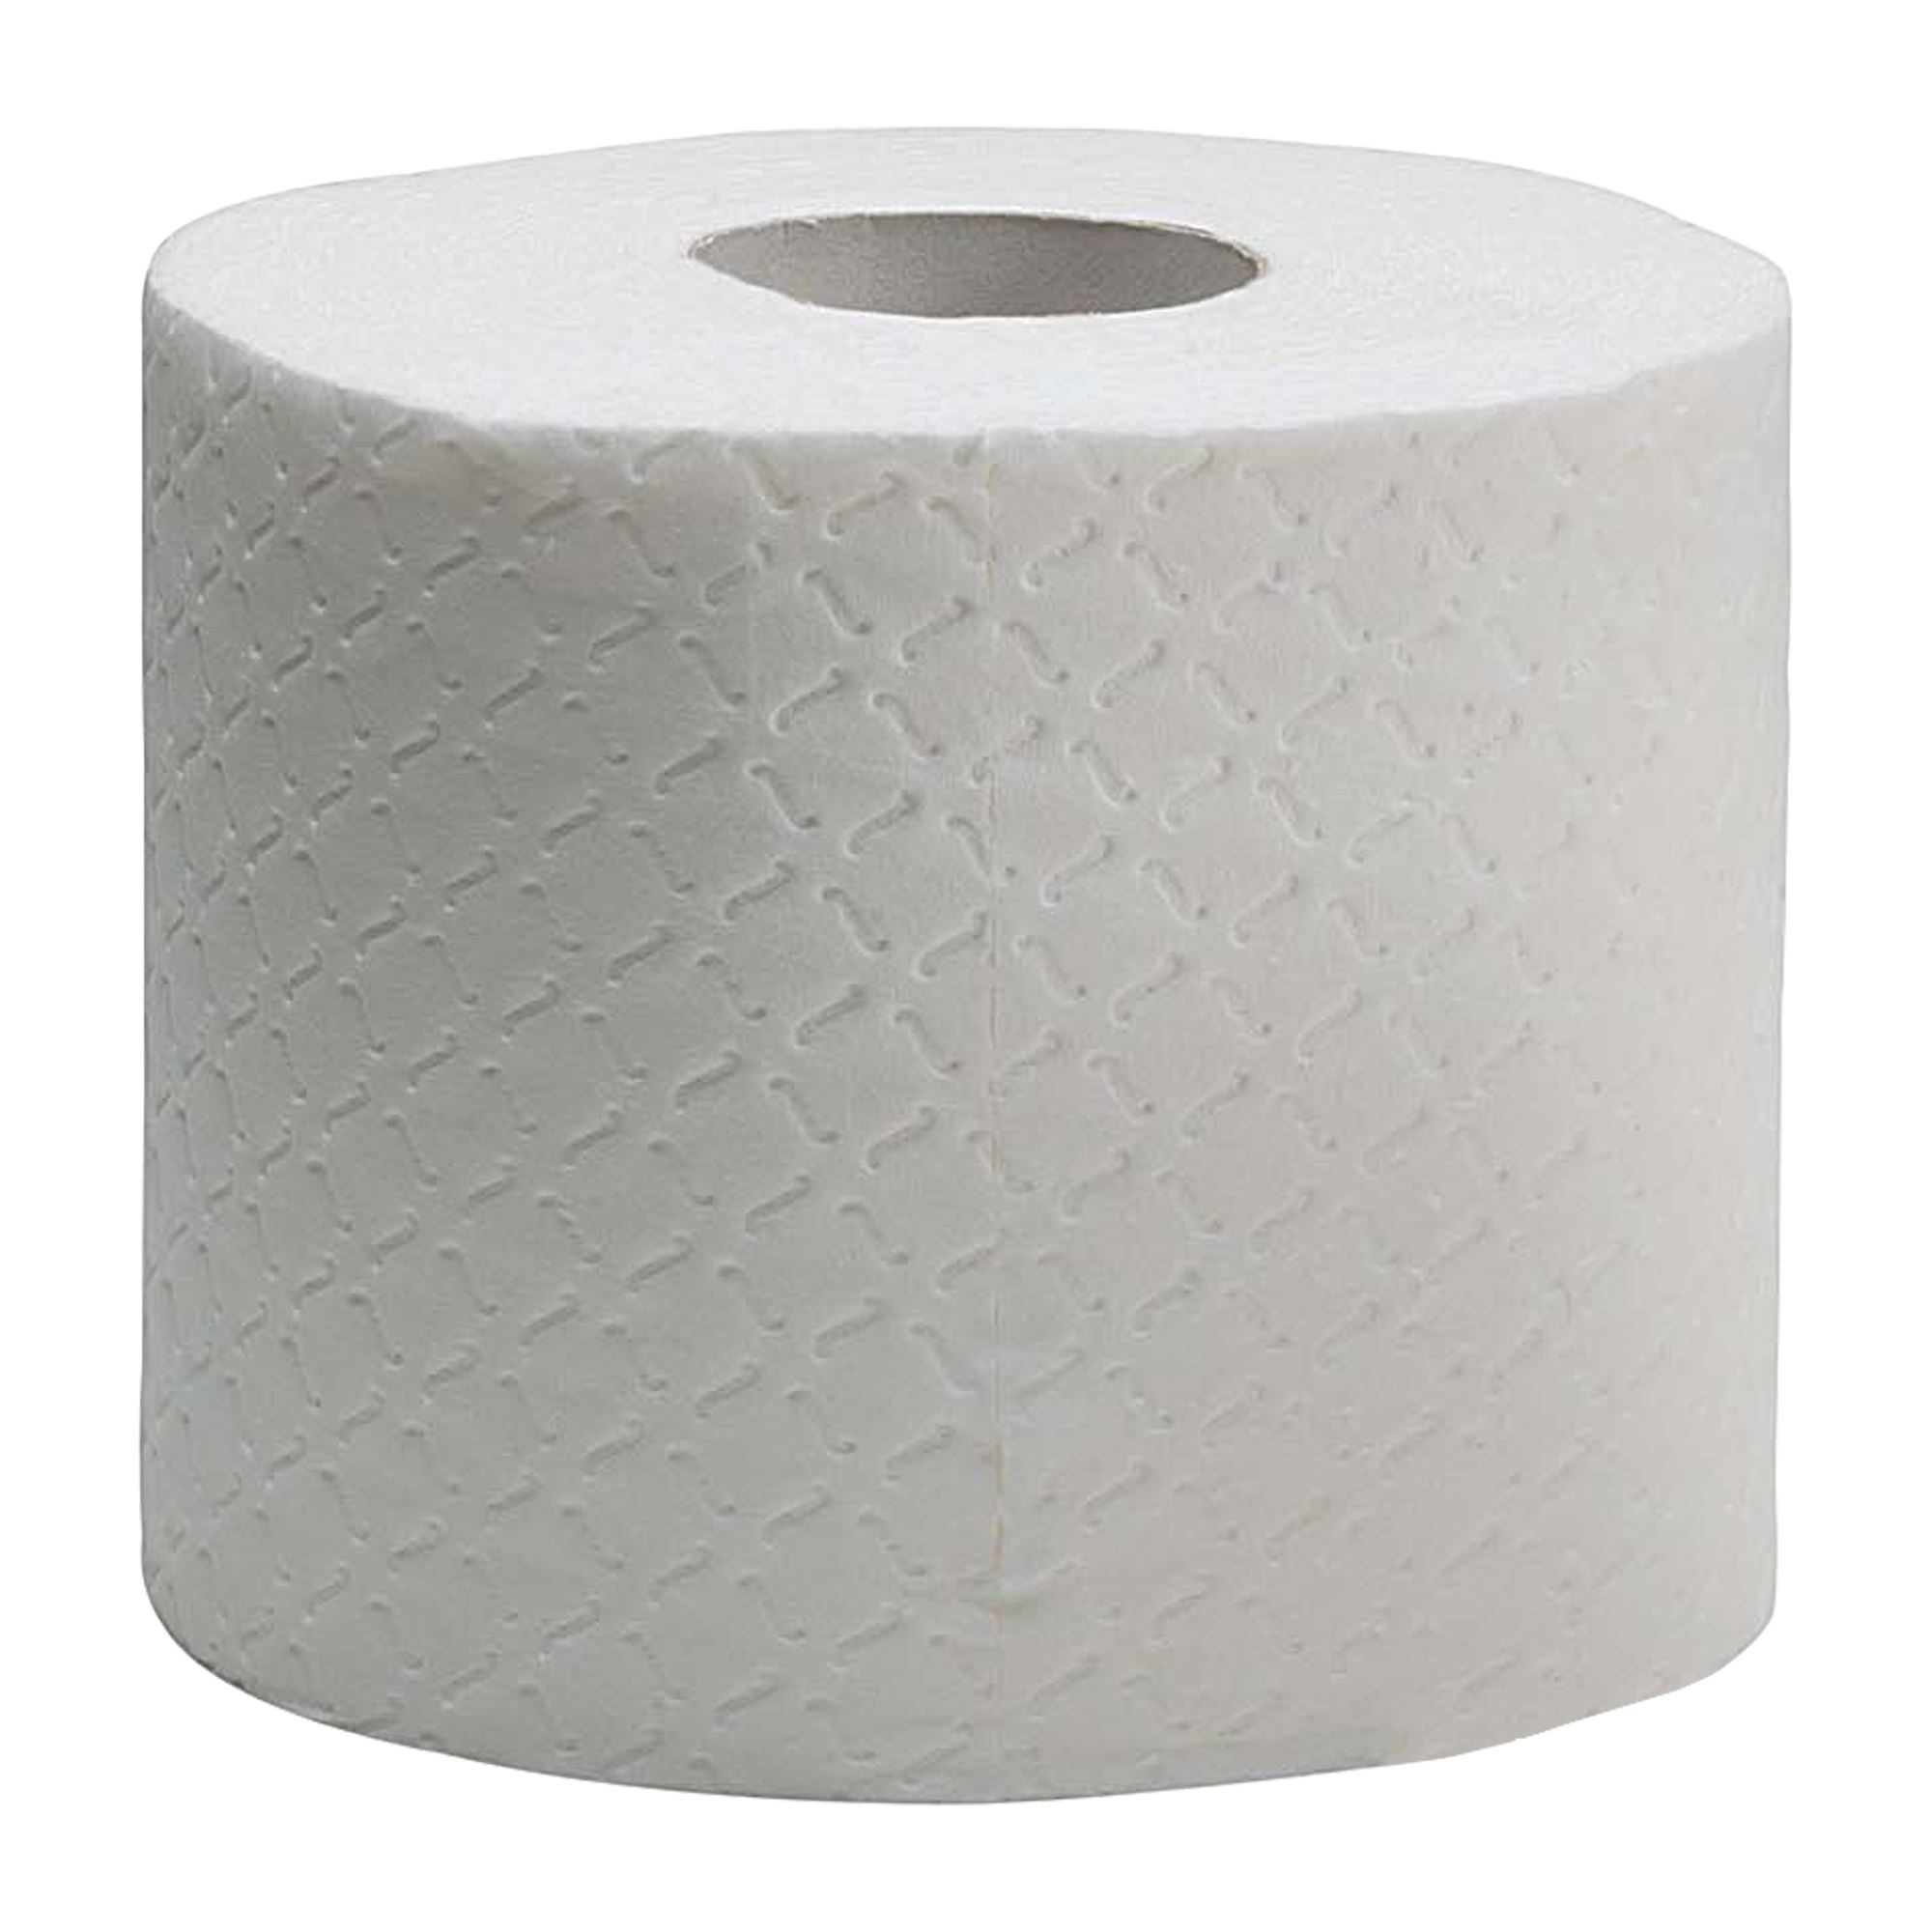 Papier toilette Kleenex rouleau 4 plis : Kimberly Clark - Voussert